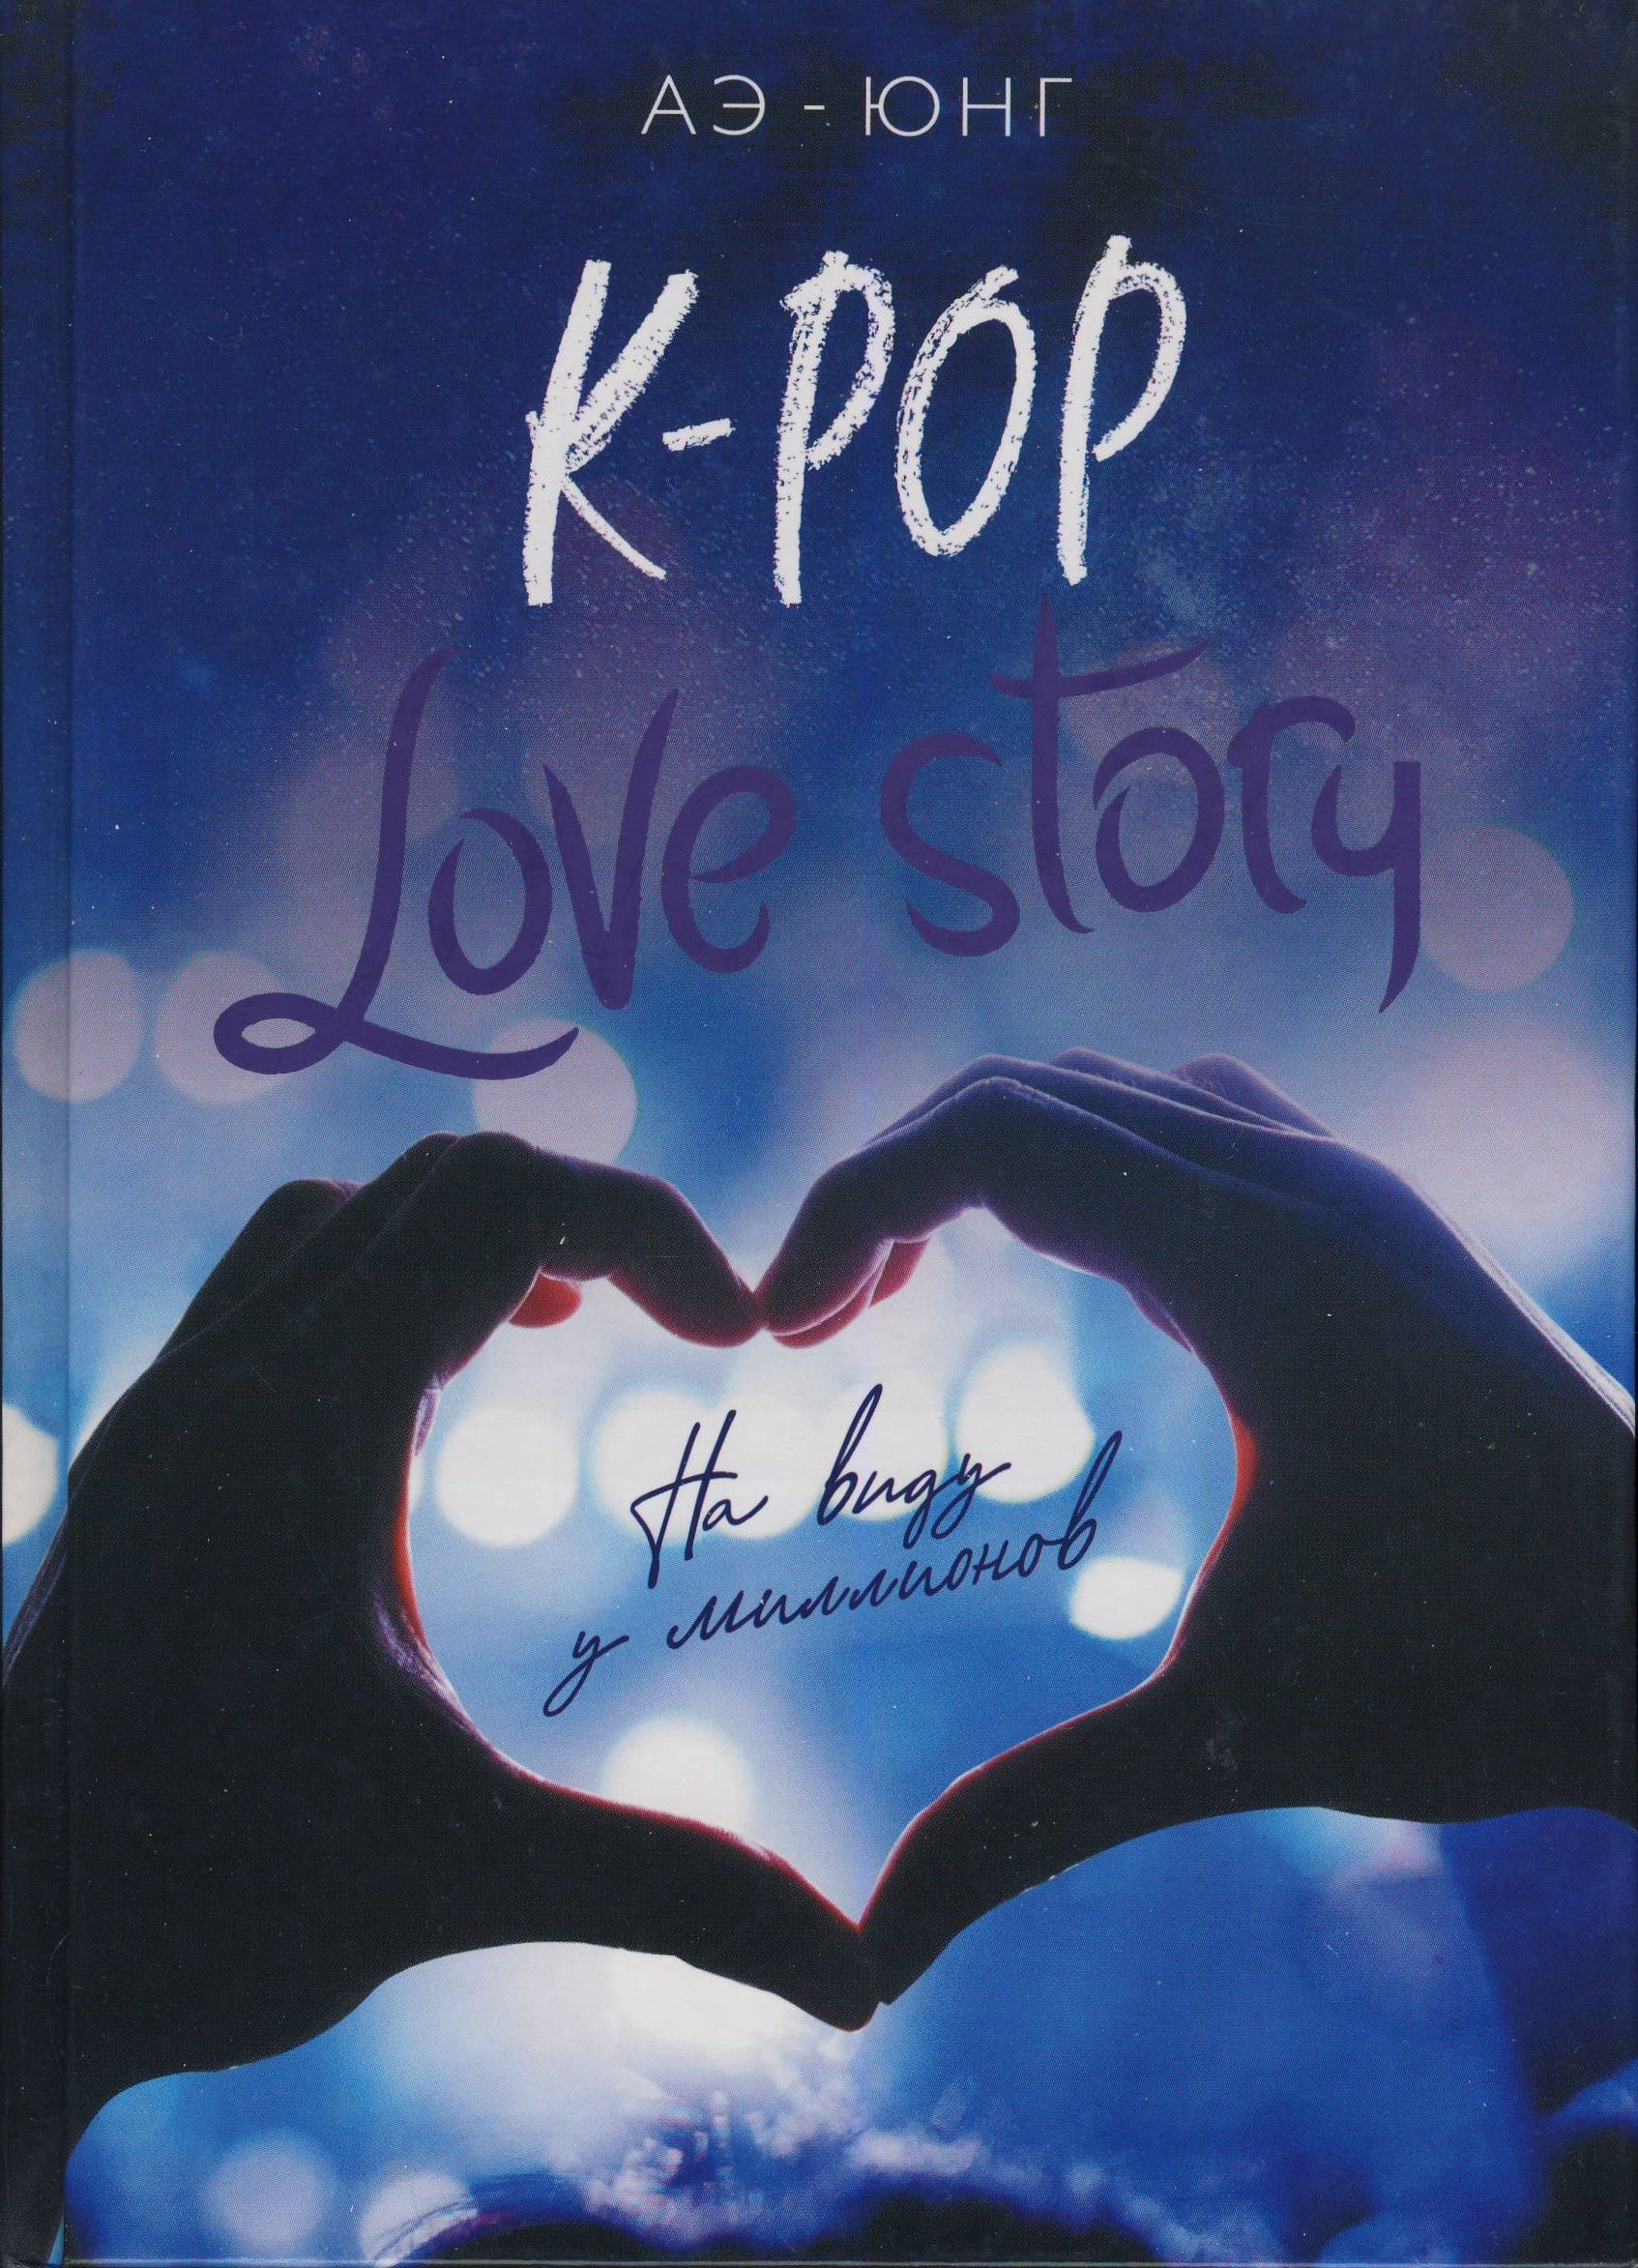 История любви фанфик. K Pop Love story книга. АЭ Юнг k Pop Love story. Книга kpop история любви. K-Pop Love story на виду у миллионов.